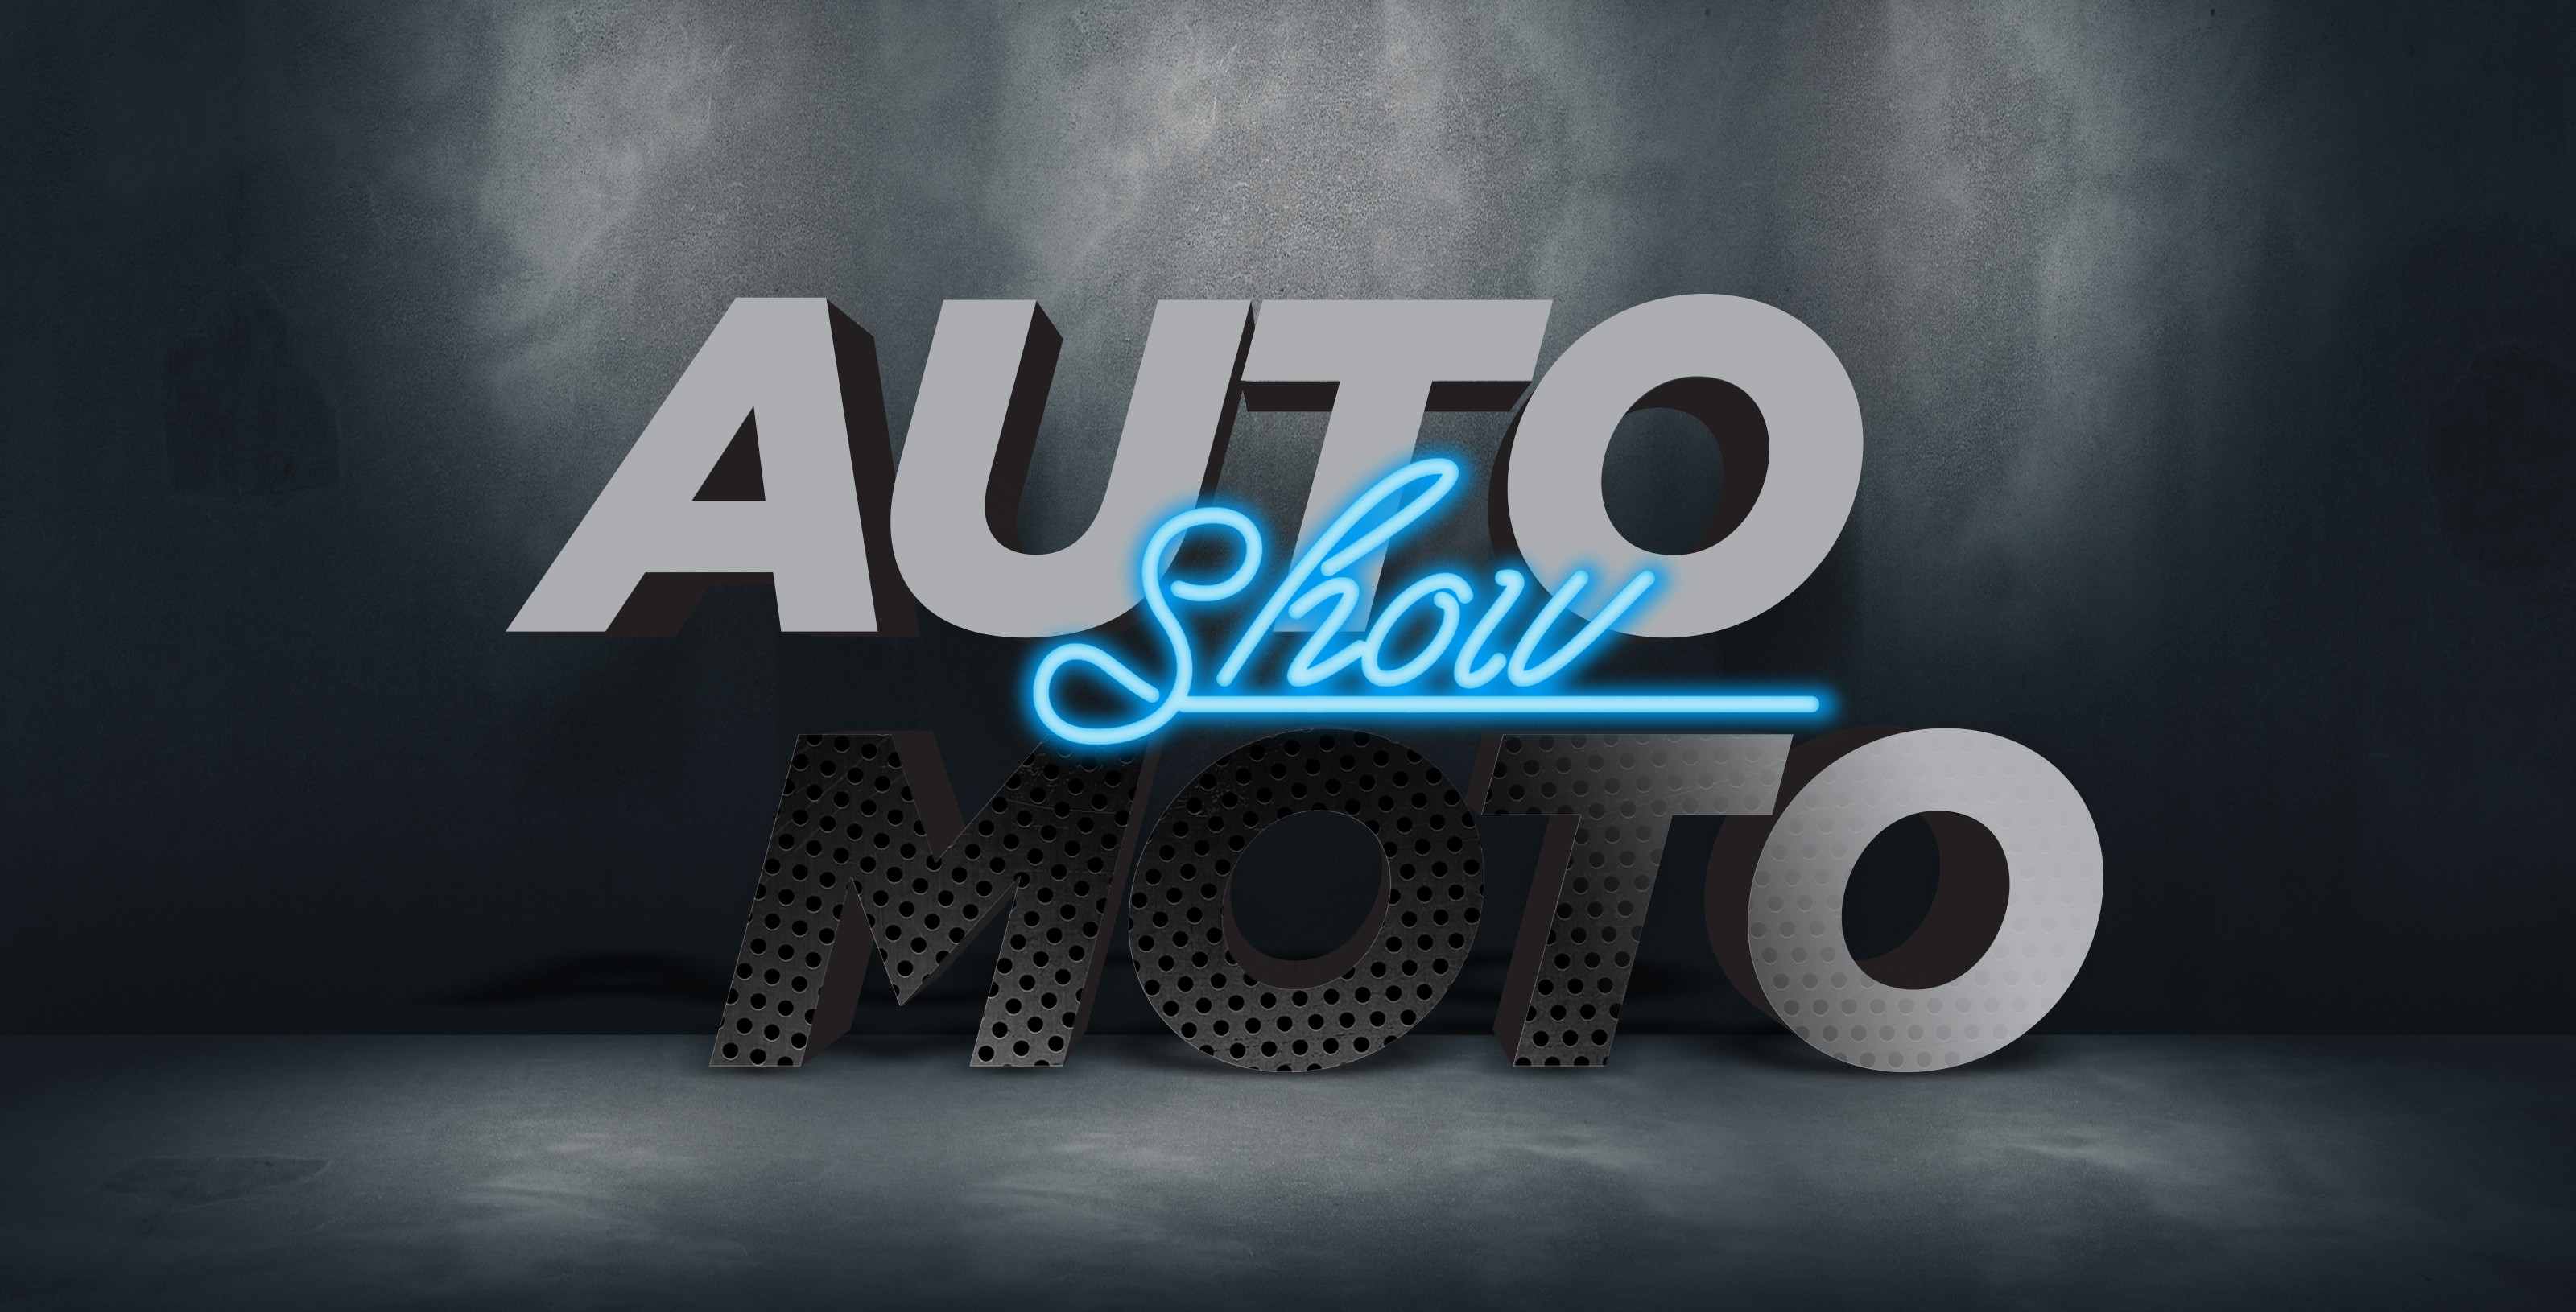 Automoto show